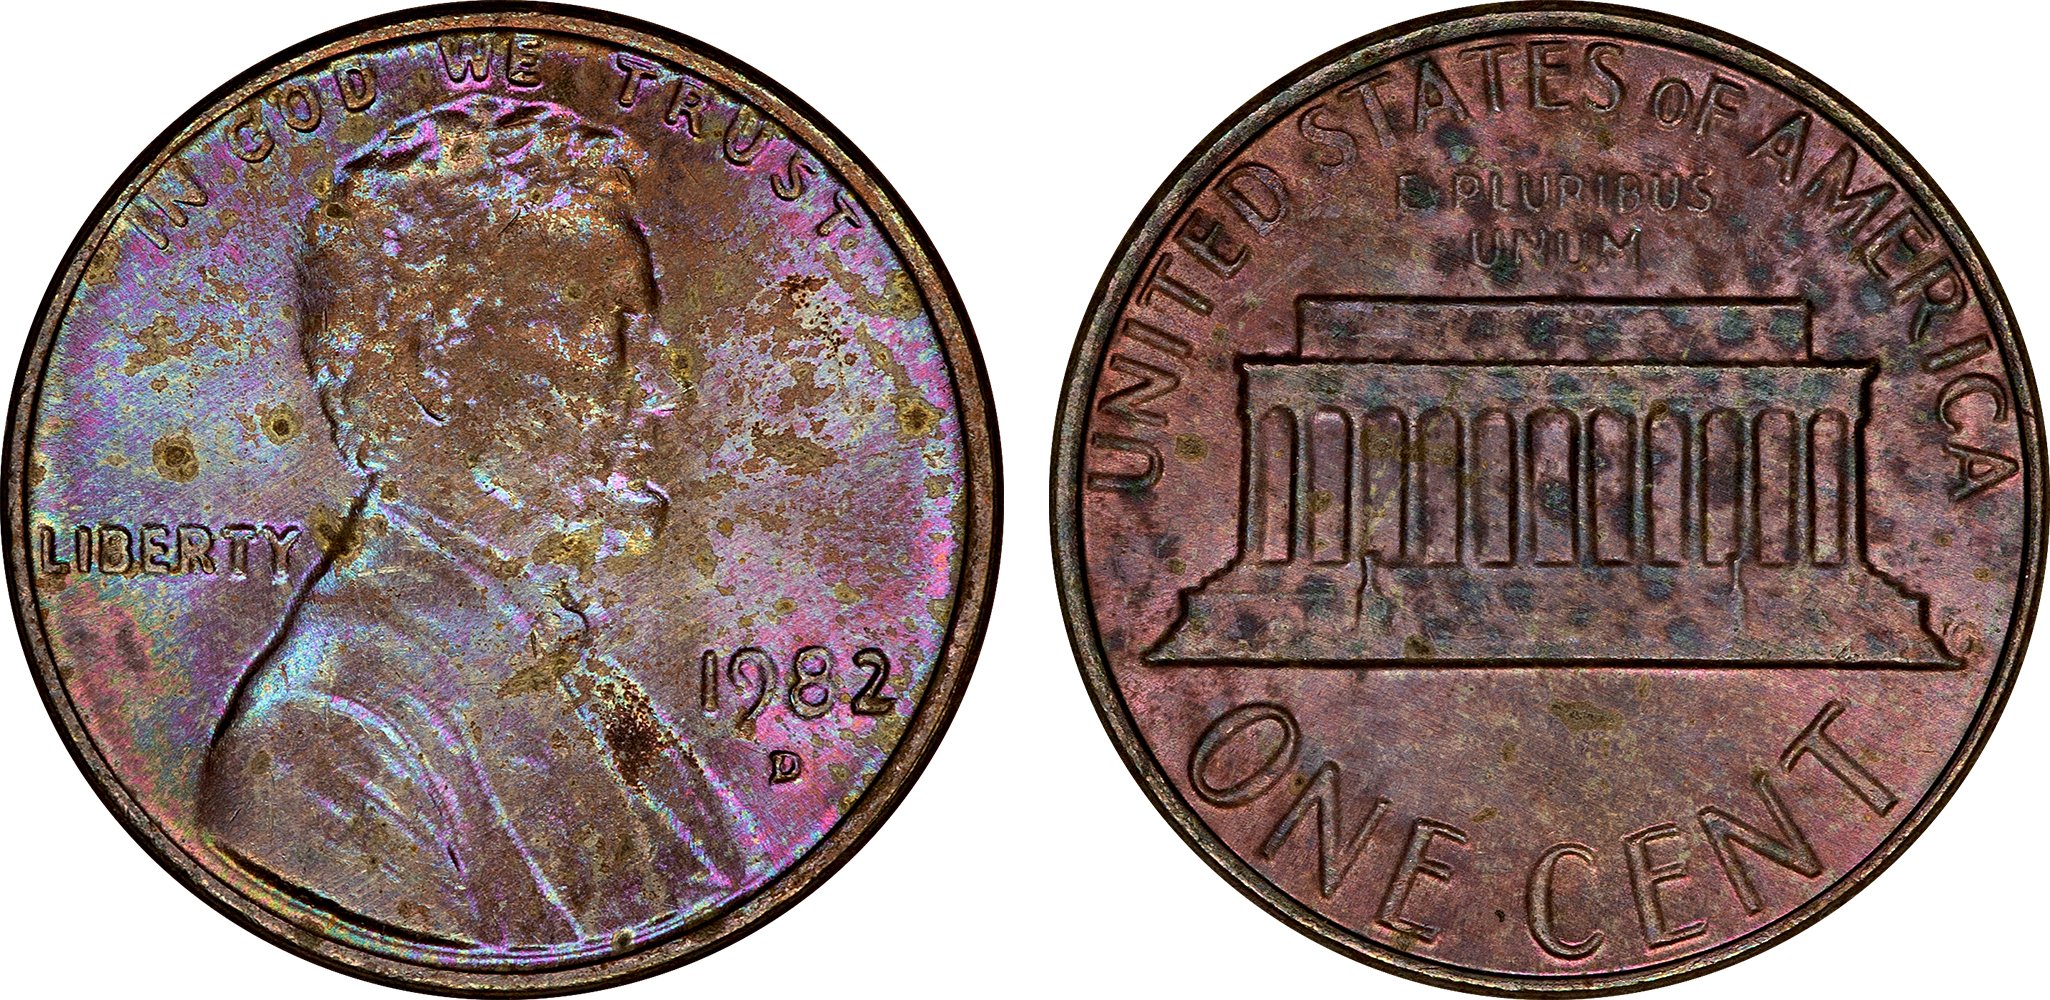 1982 D (Copper - LG Date) - Lincoln Cent.jpg